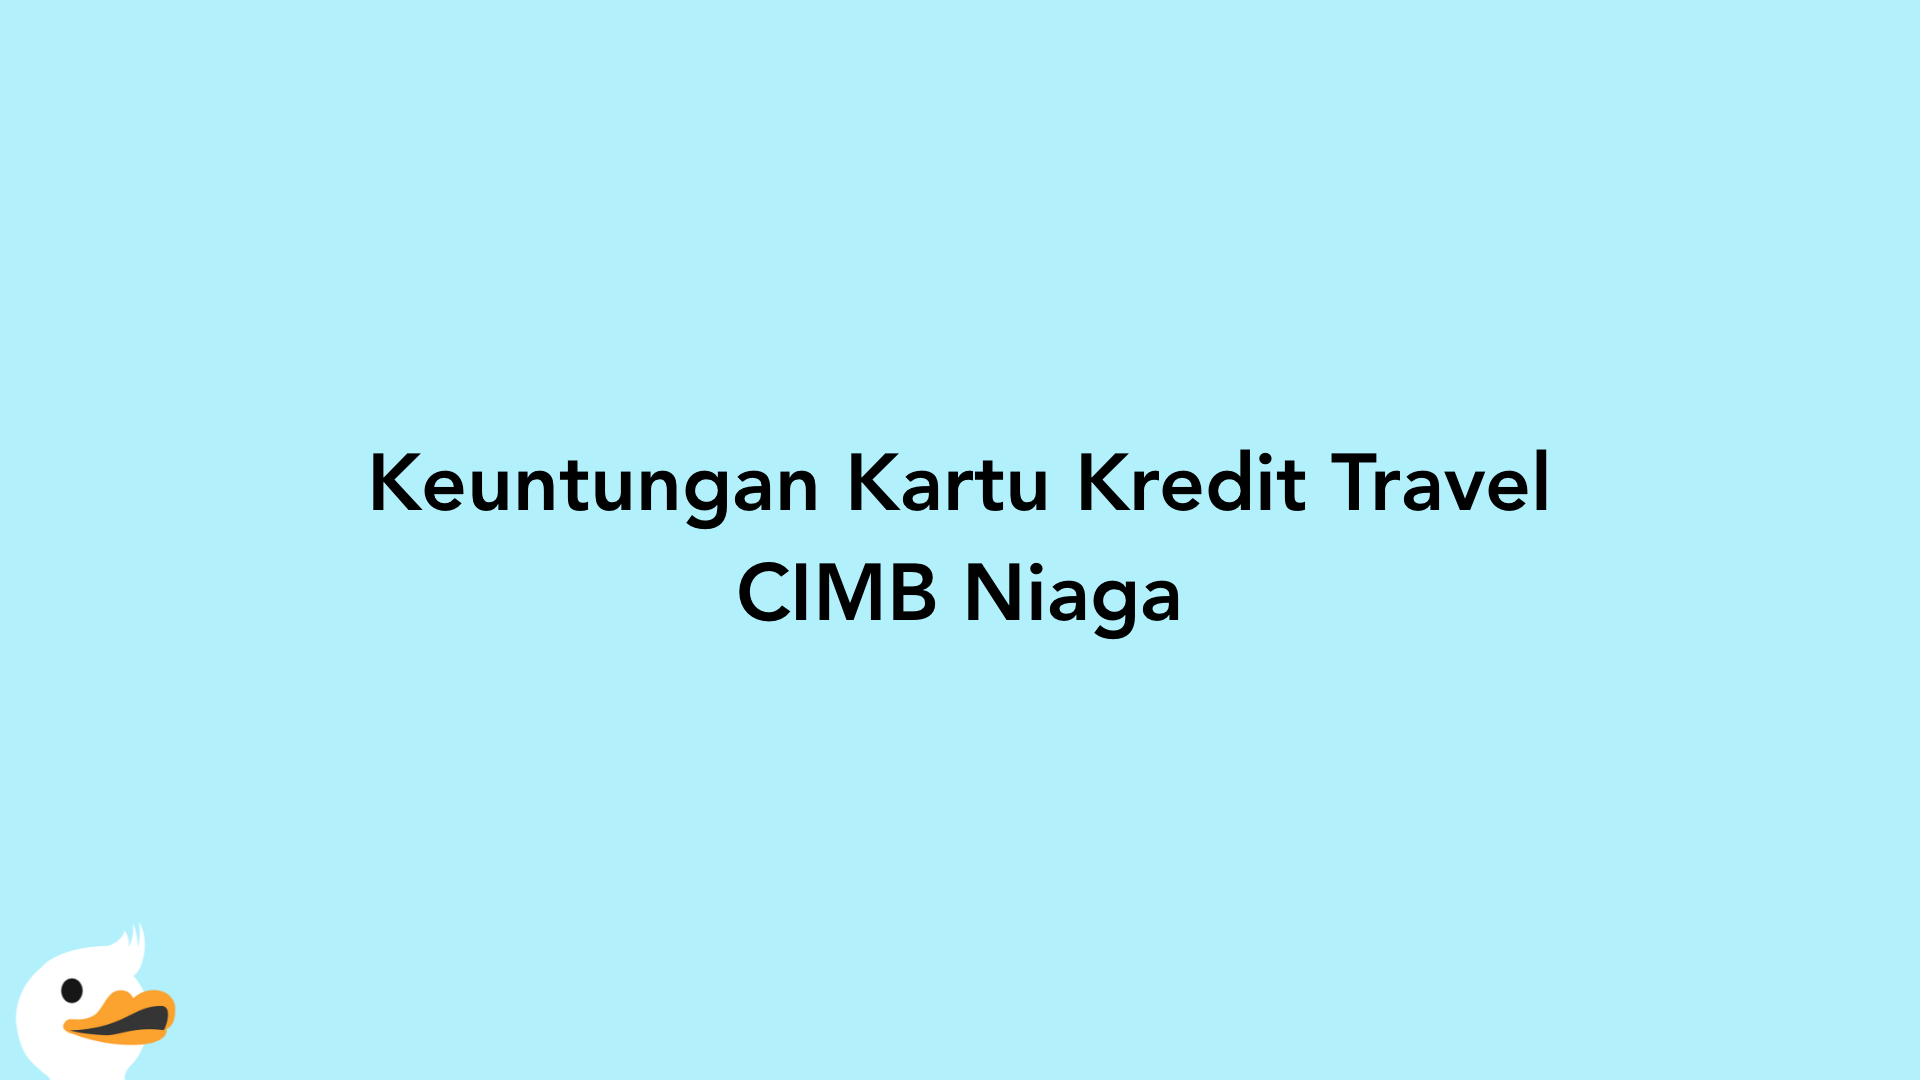 Keuntungan Kartu Kredit Travel CIMB Niaga